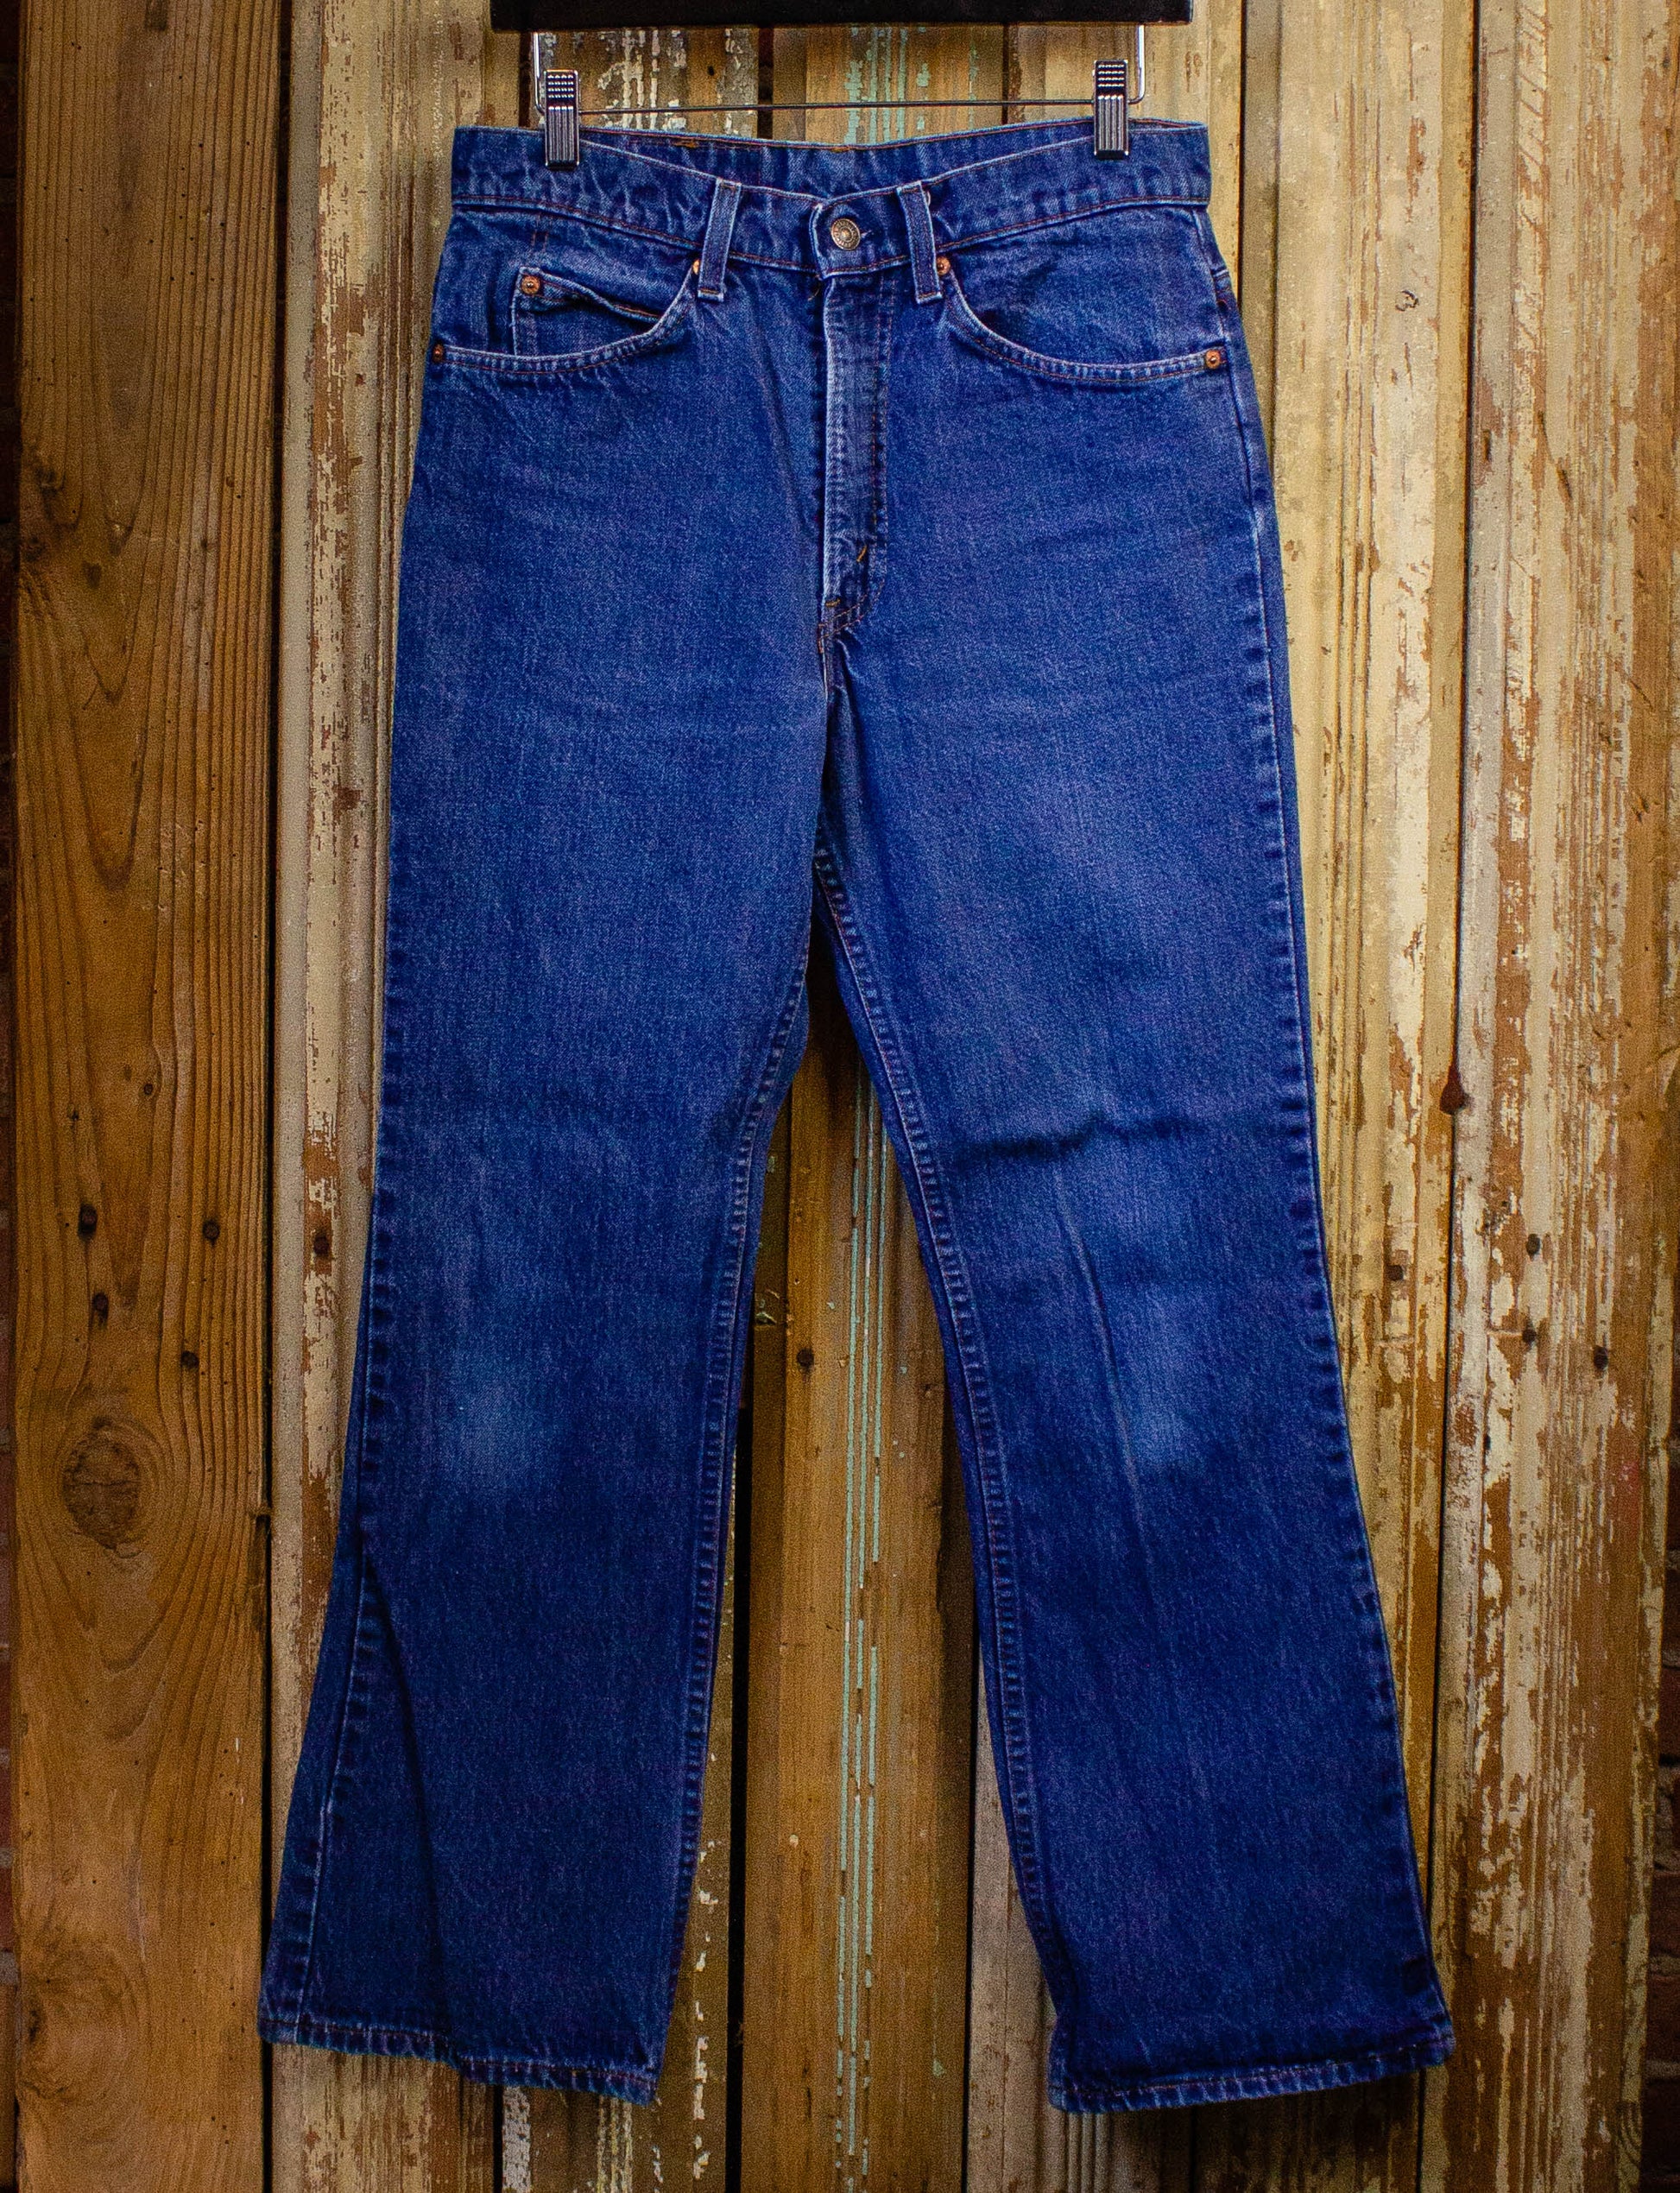 Vintage Levi's Orange Tab 517 Denim Jeans 70s Dark Wash 30x29